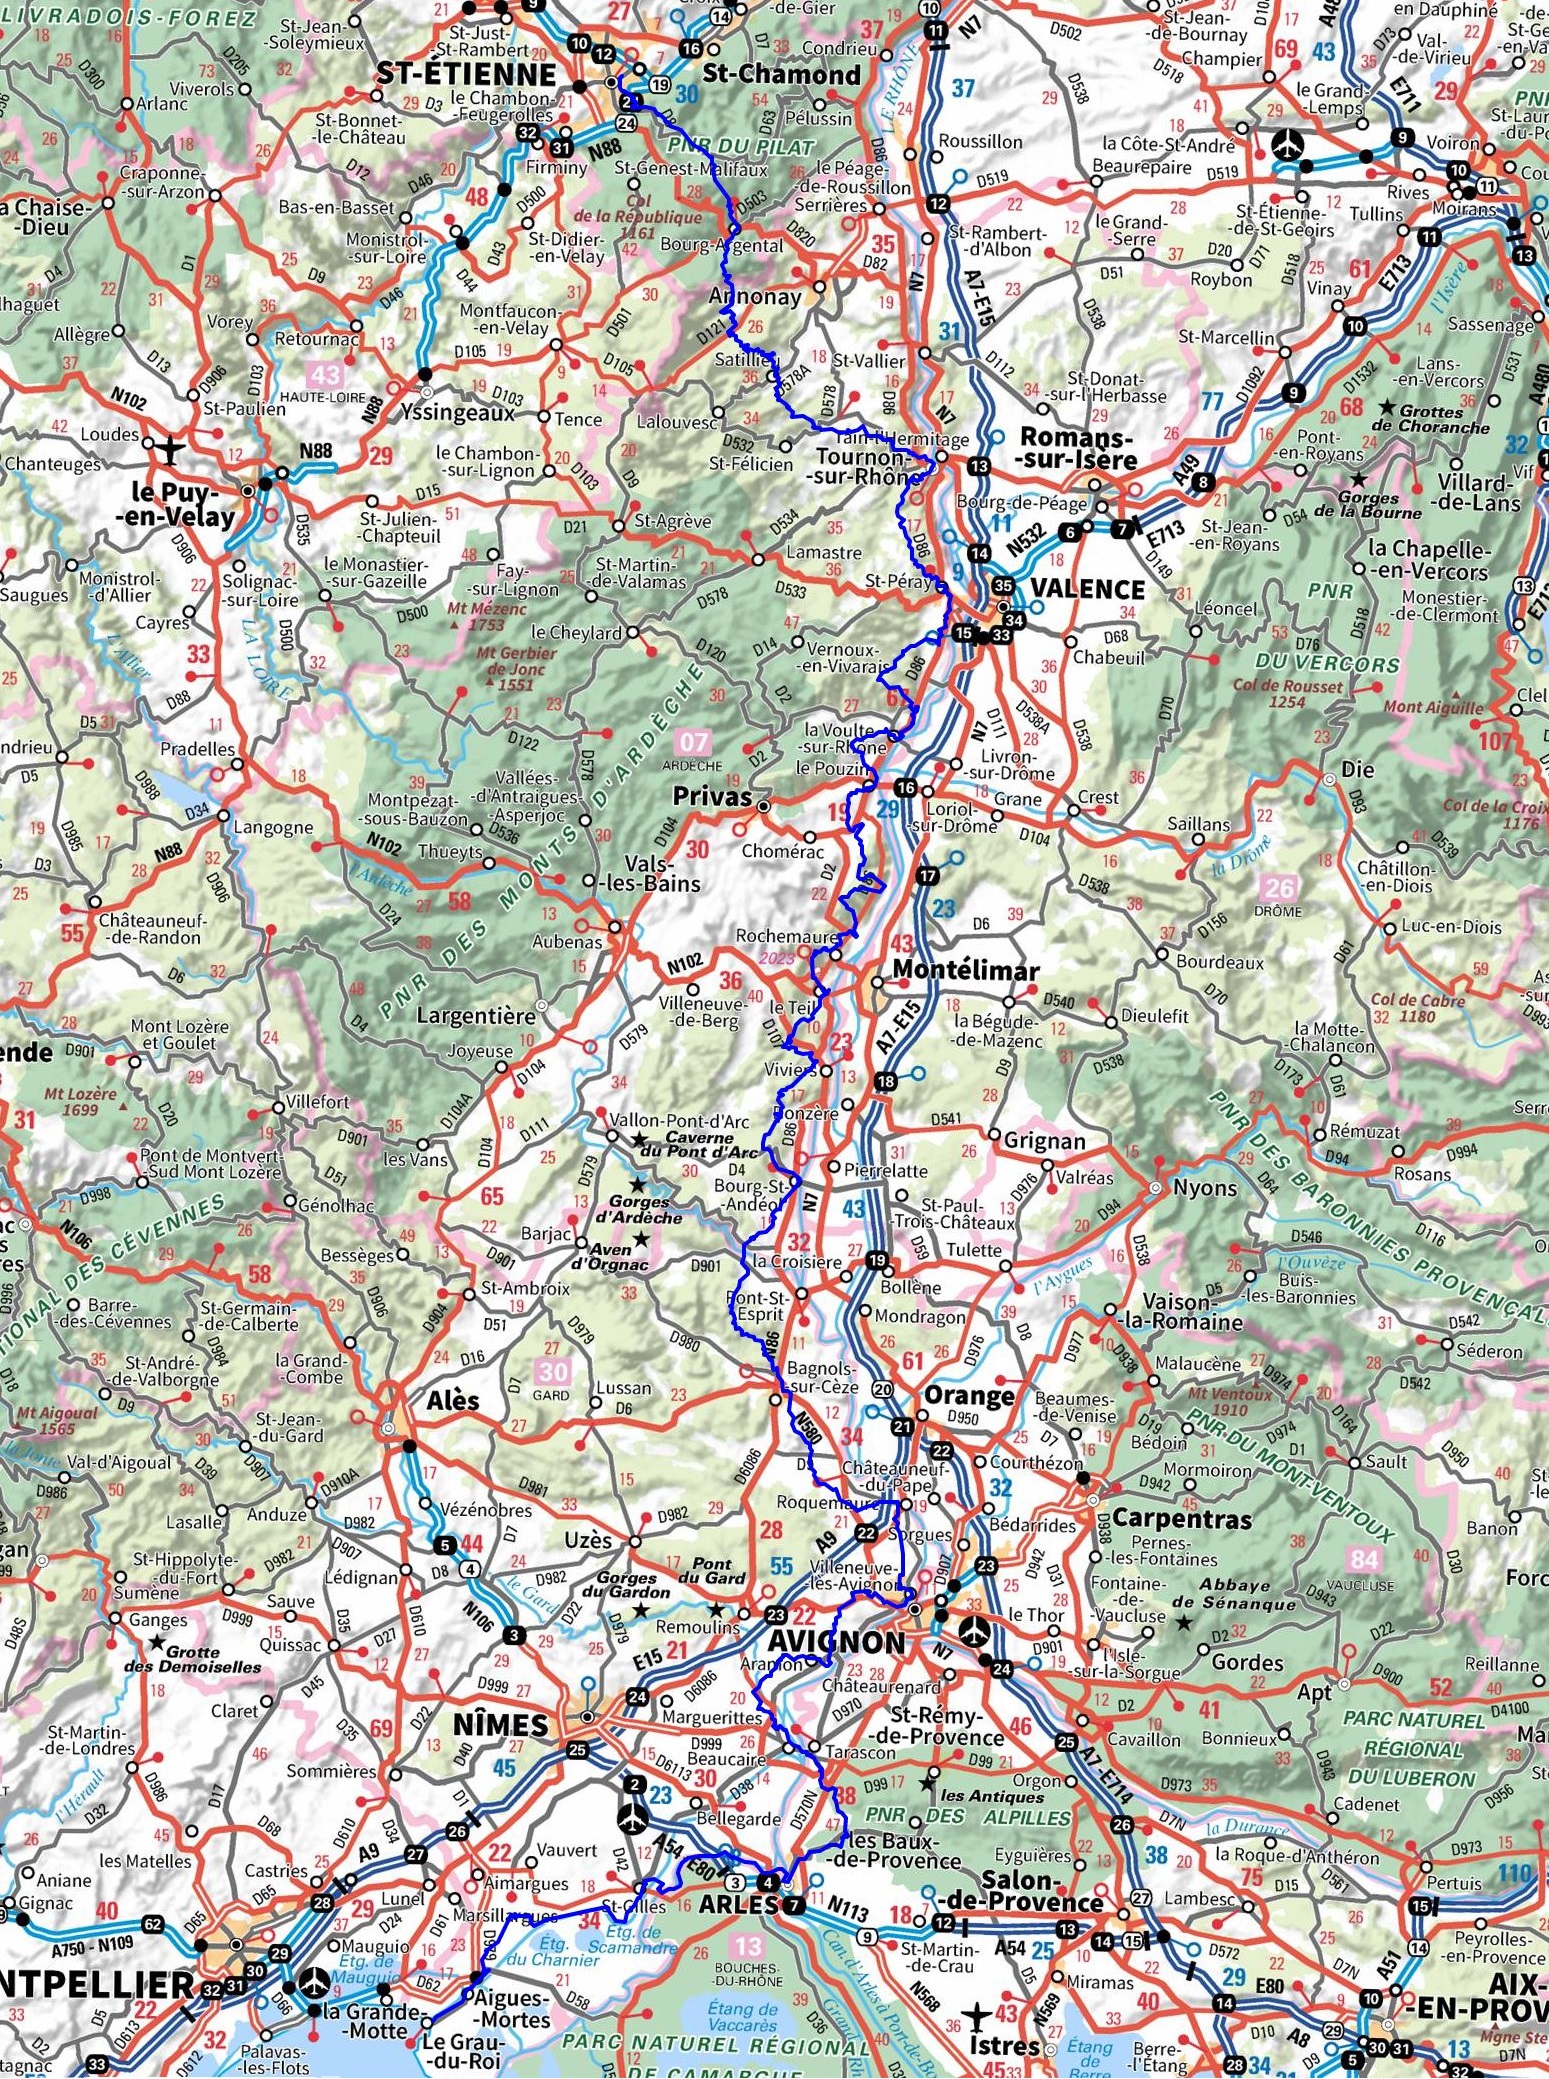 GR42 Hiking from St Etienne (Loire) to Le Grau-du-Roi (Gard) 1